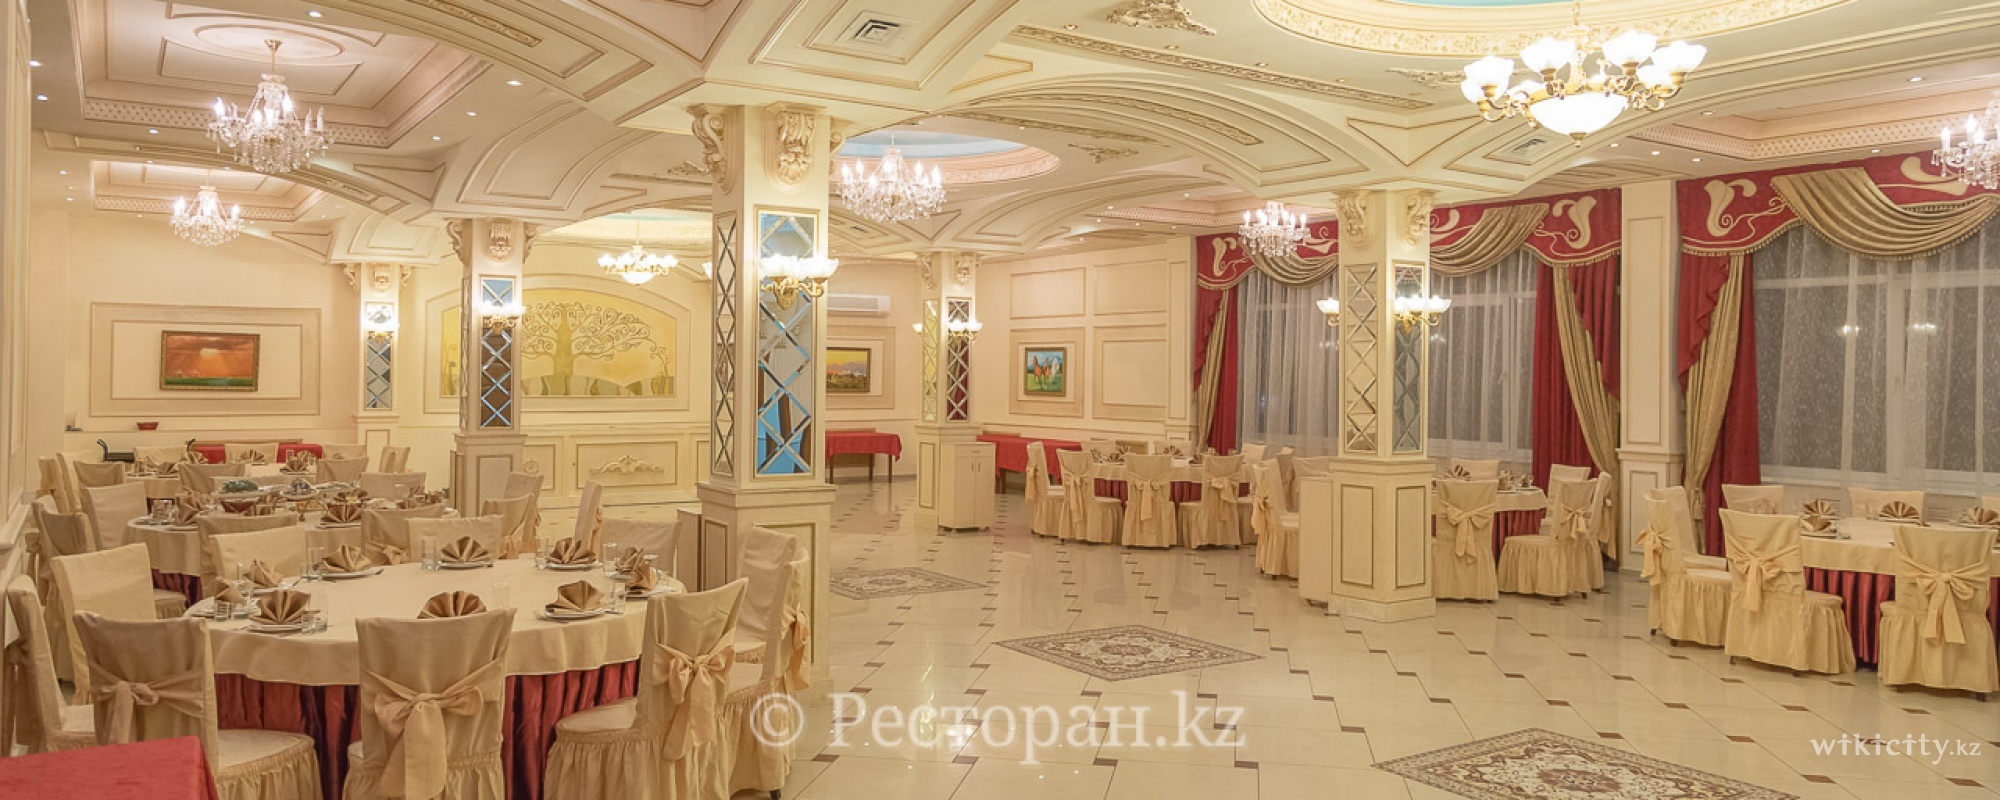 Фото Алтын Холл - Алматы. малый зал 130 гостей